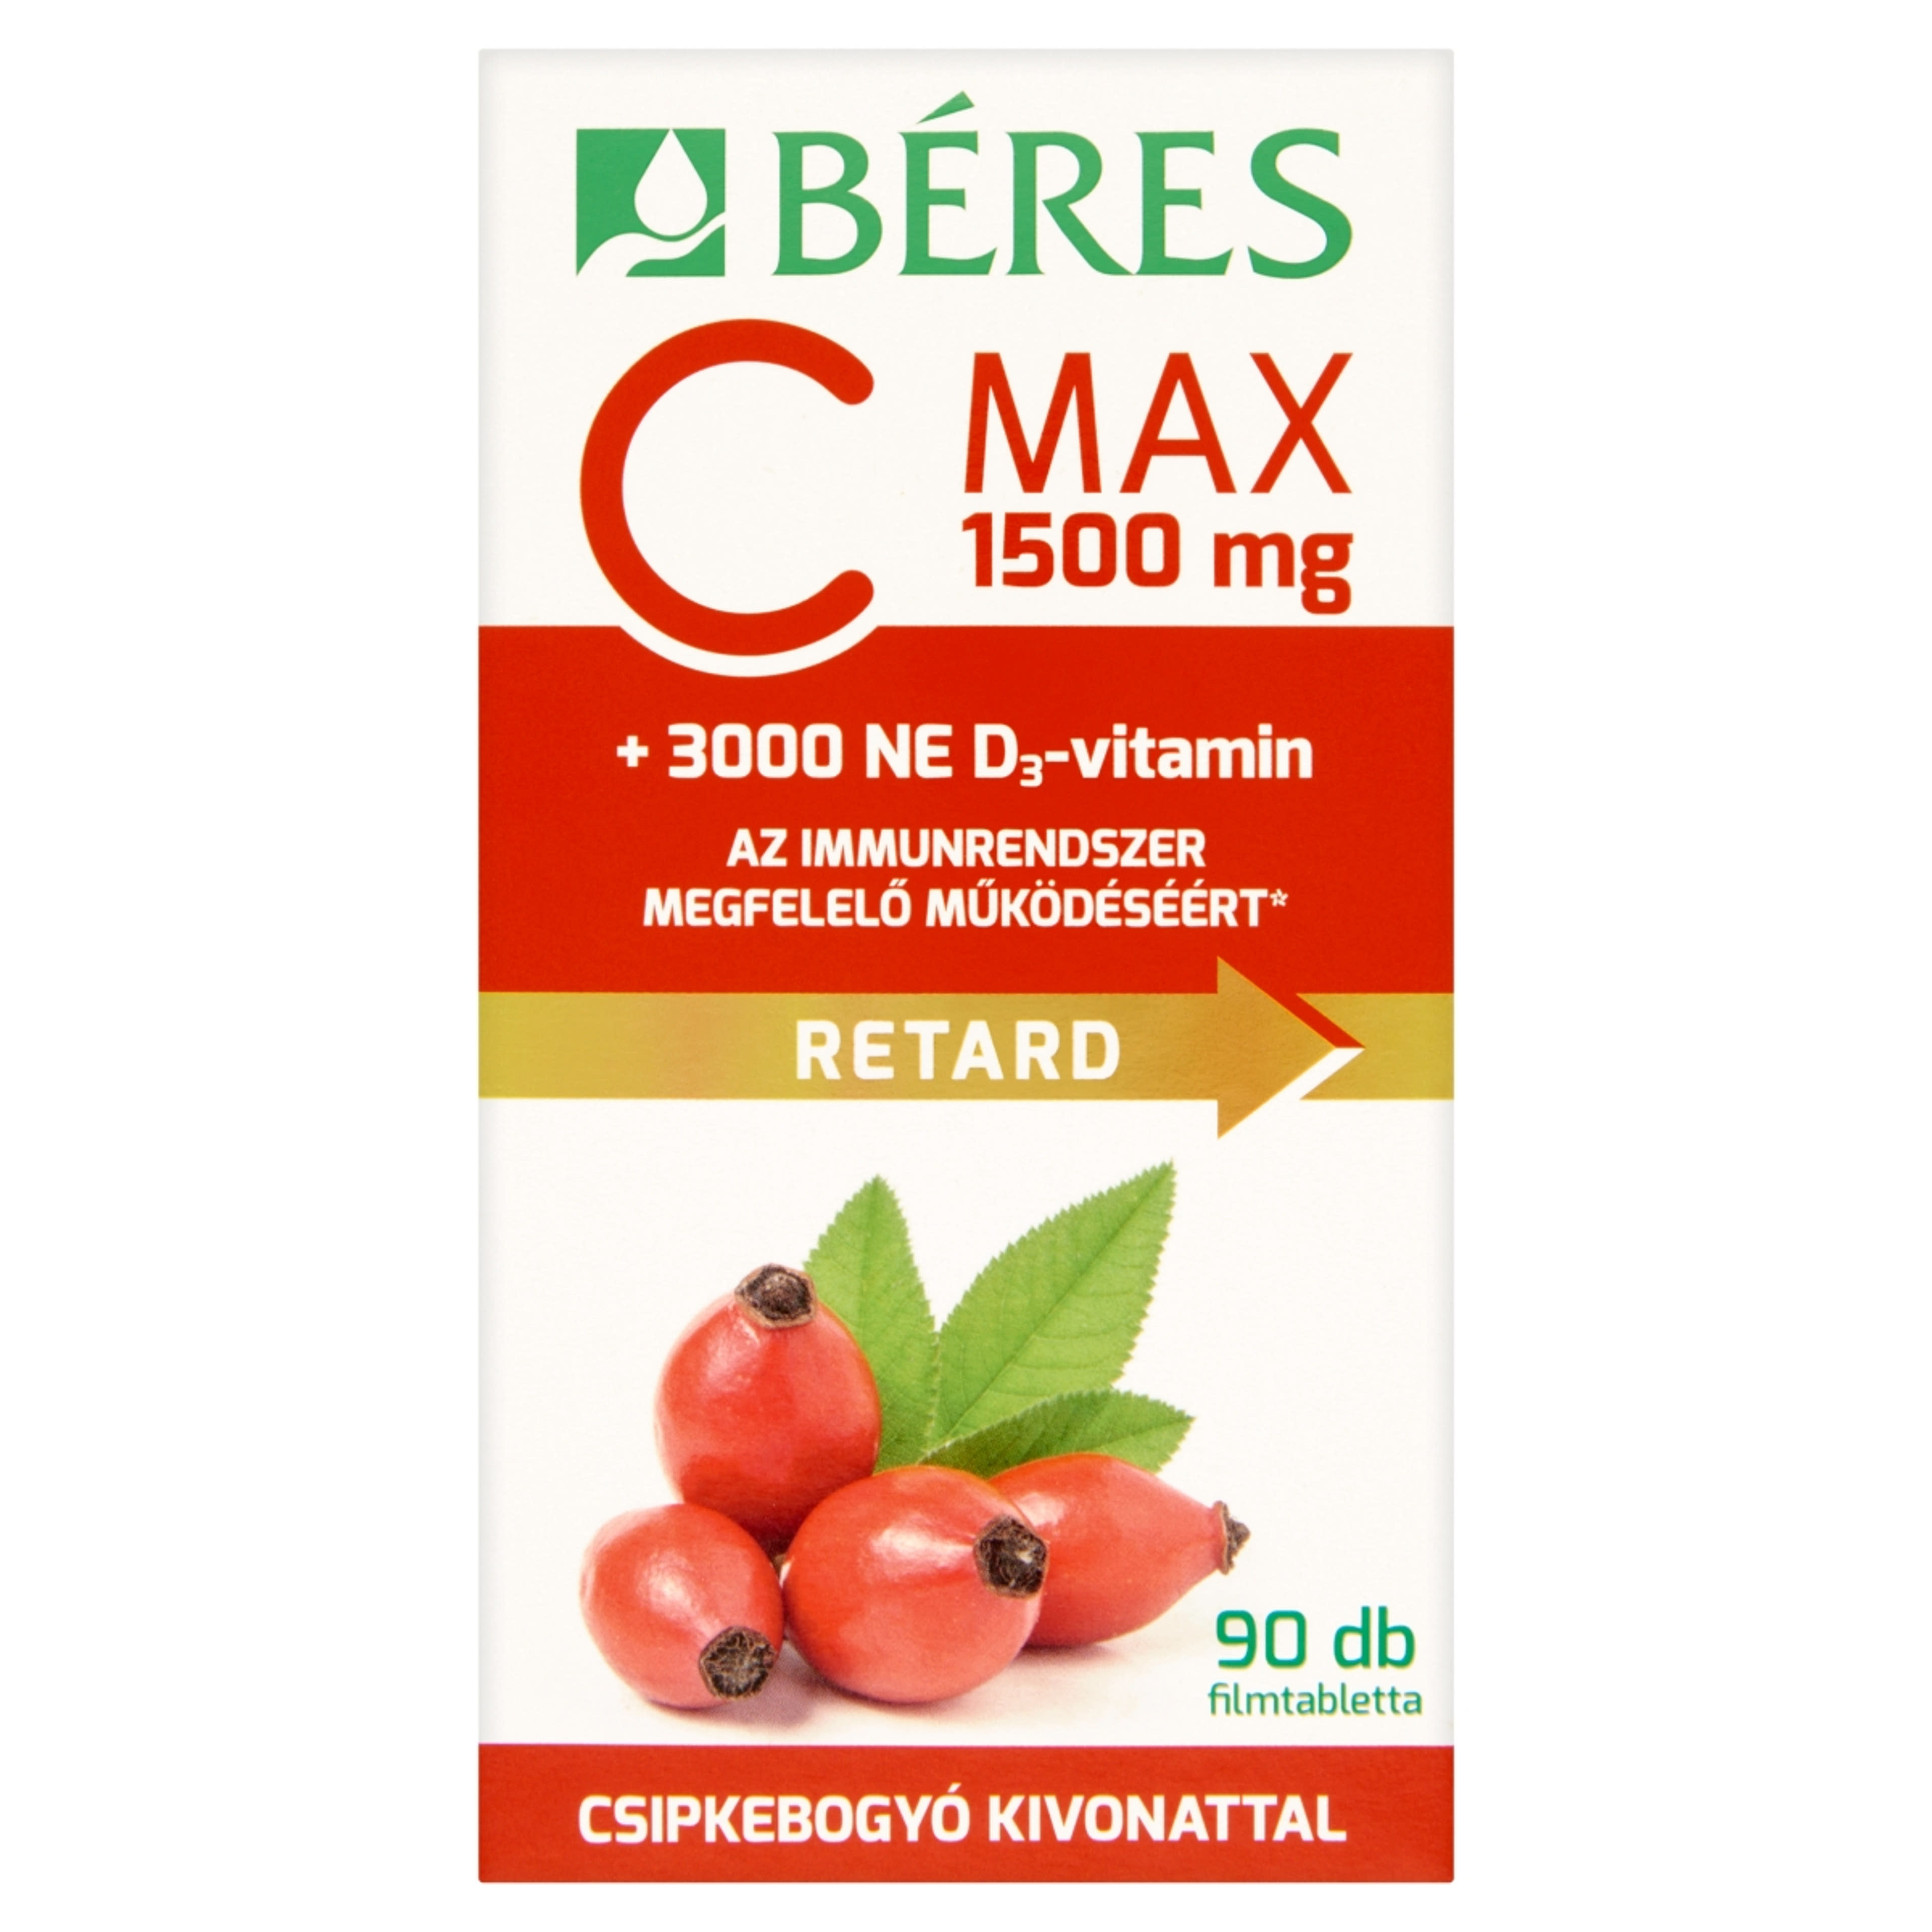 Béres C MAX 1500 mg RETARD csipkebogyó kivonattal + 3000 NE D₃-vitamin filmtabletta - 90 db-1